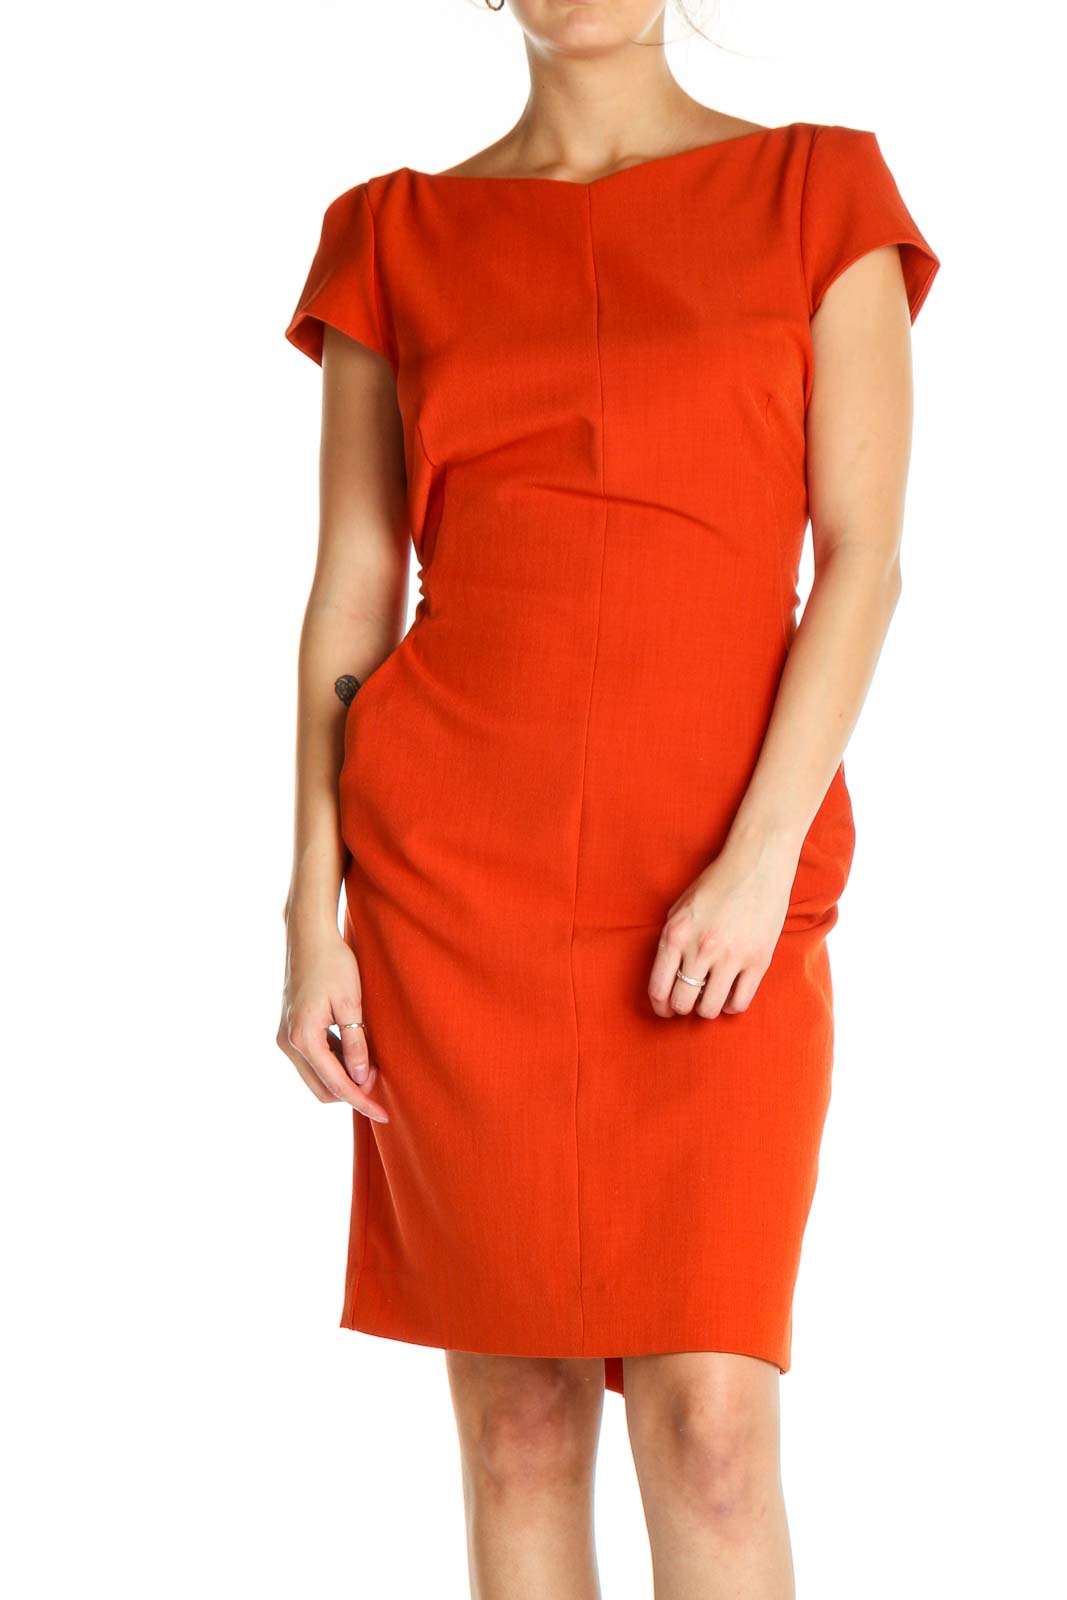 Orange Solid Work Sheath Dress Front